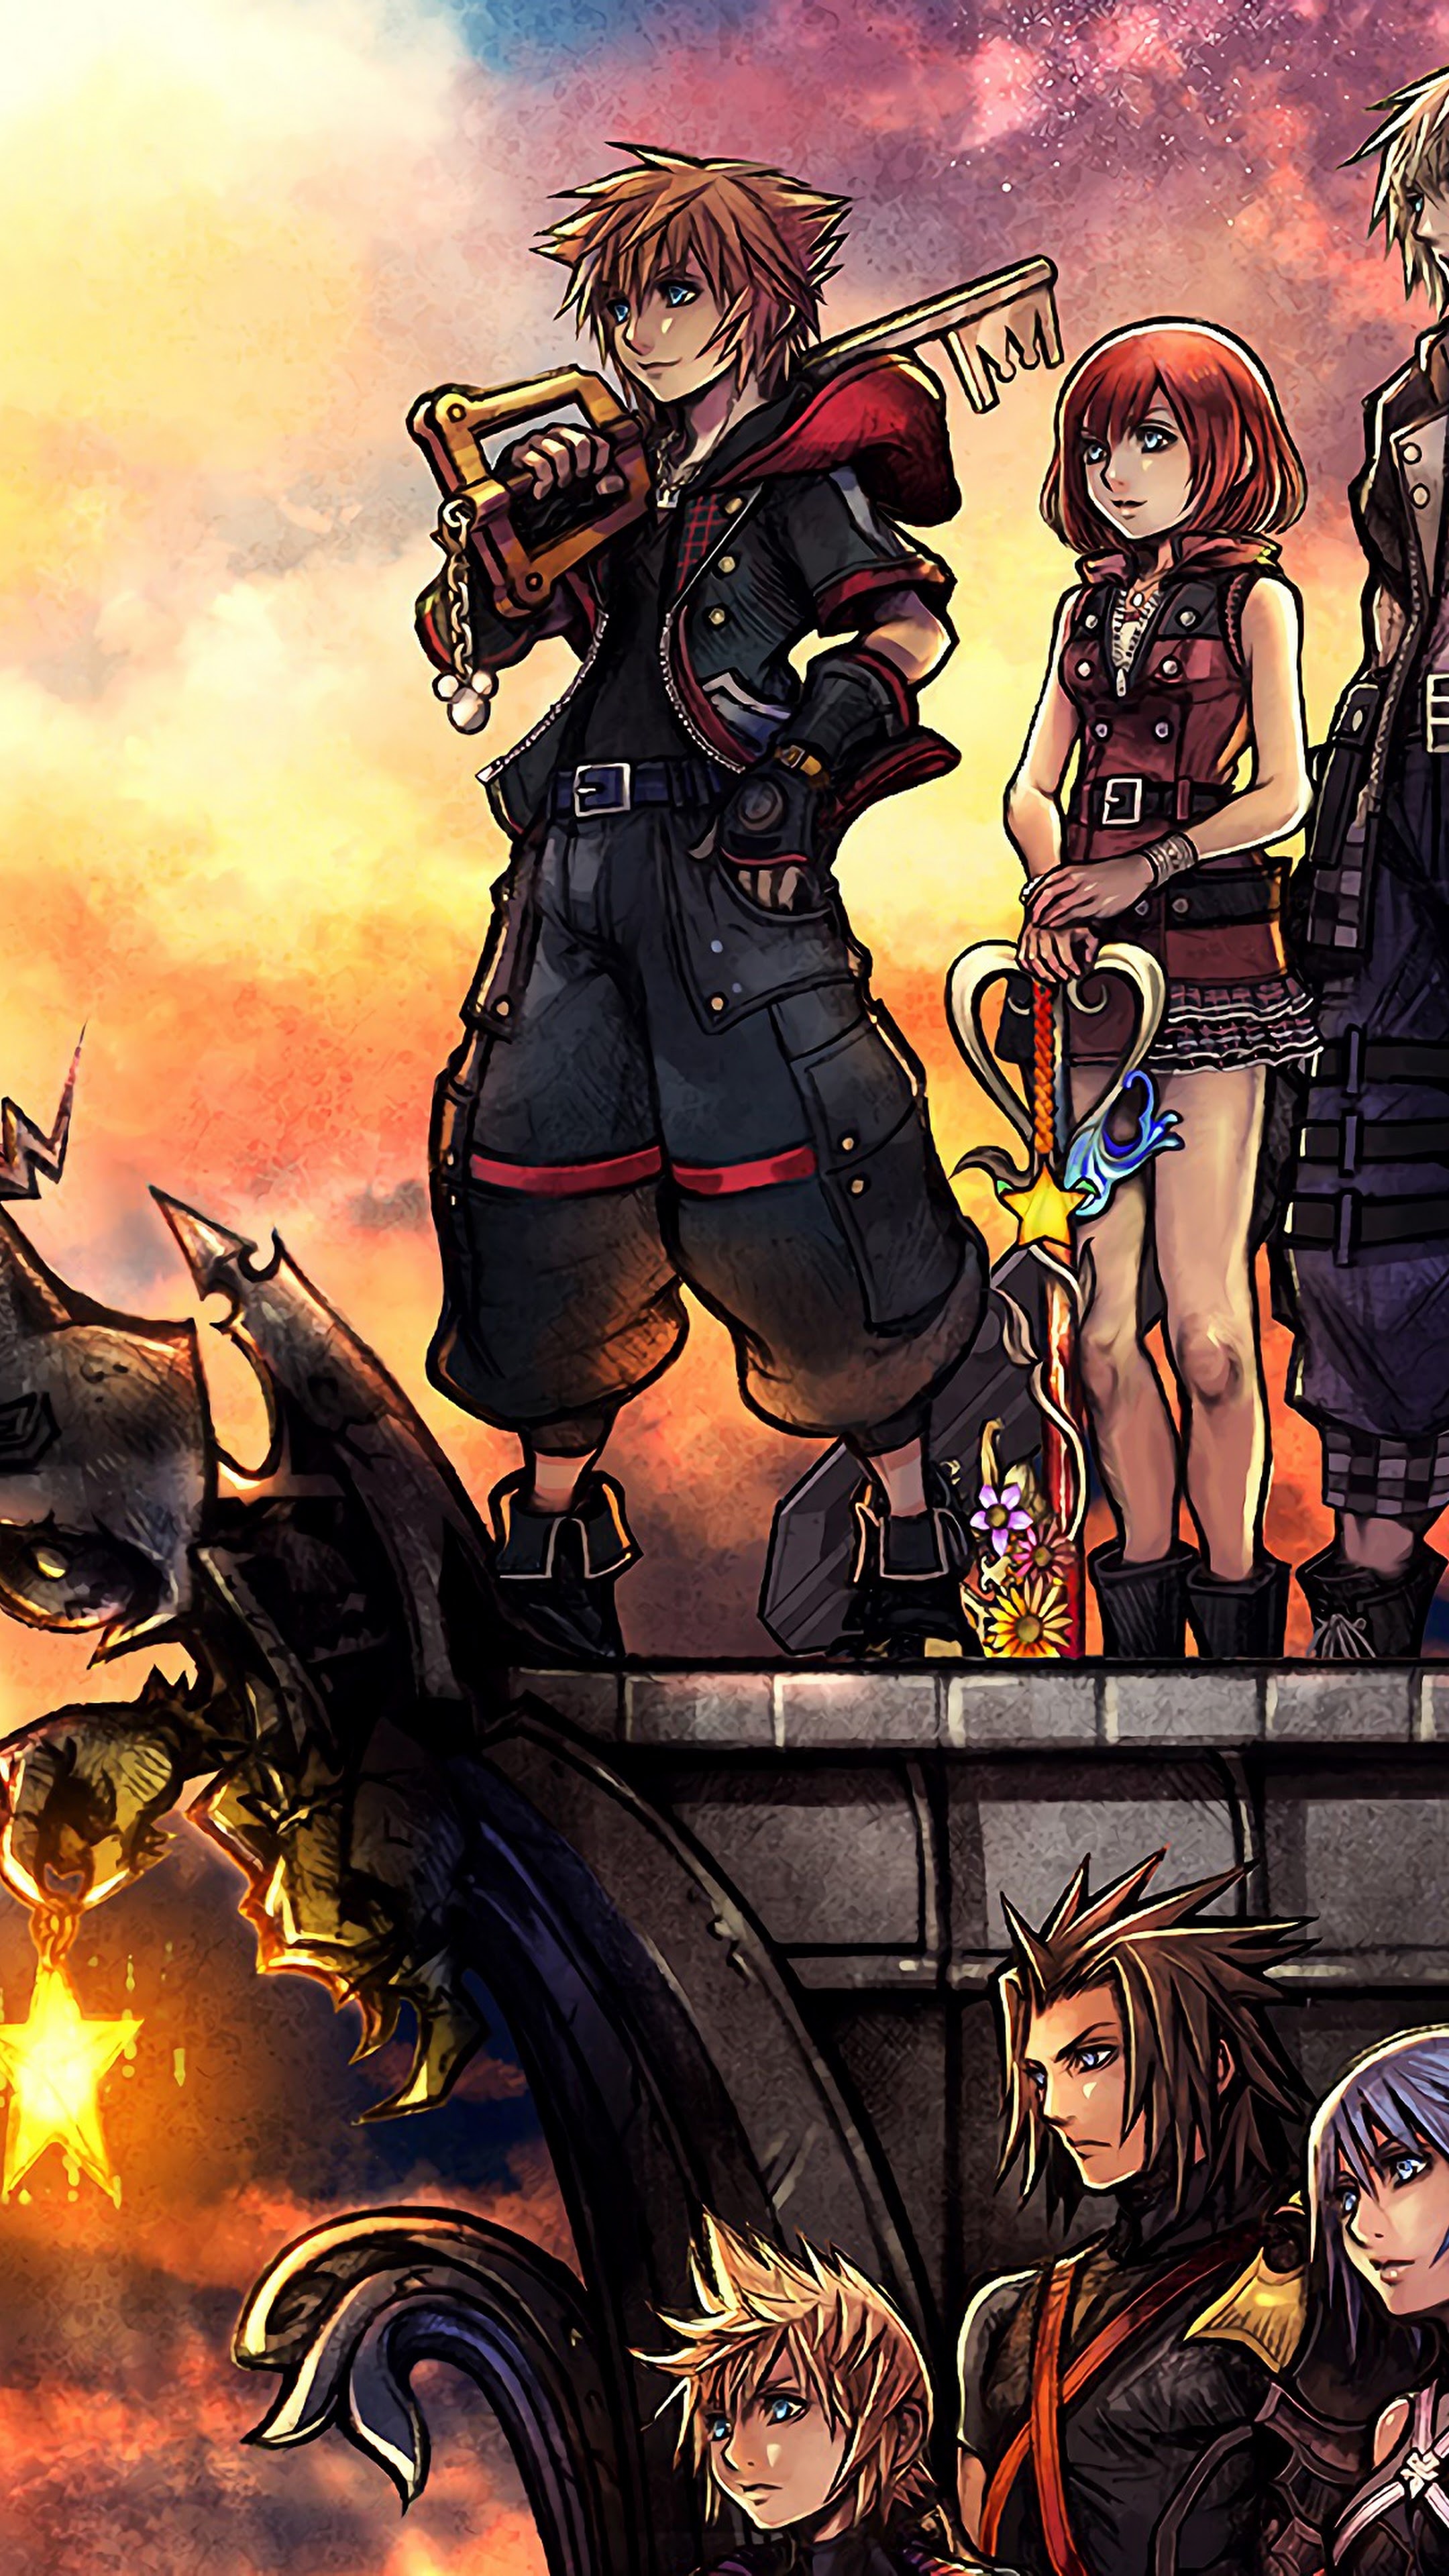 Kingdom Hearts 3 characters, 4K wallpaper, Keyblade wielders, Exciting adventure, 2160x3840 4K Handy